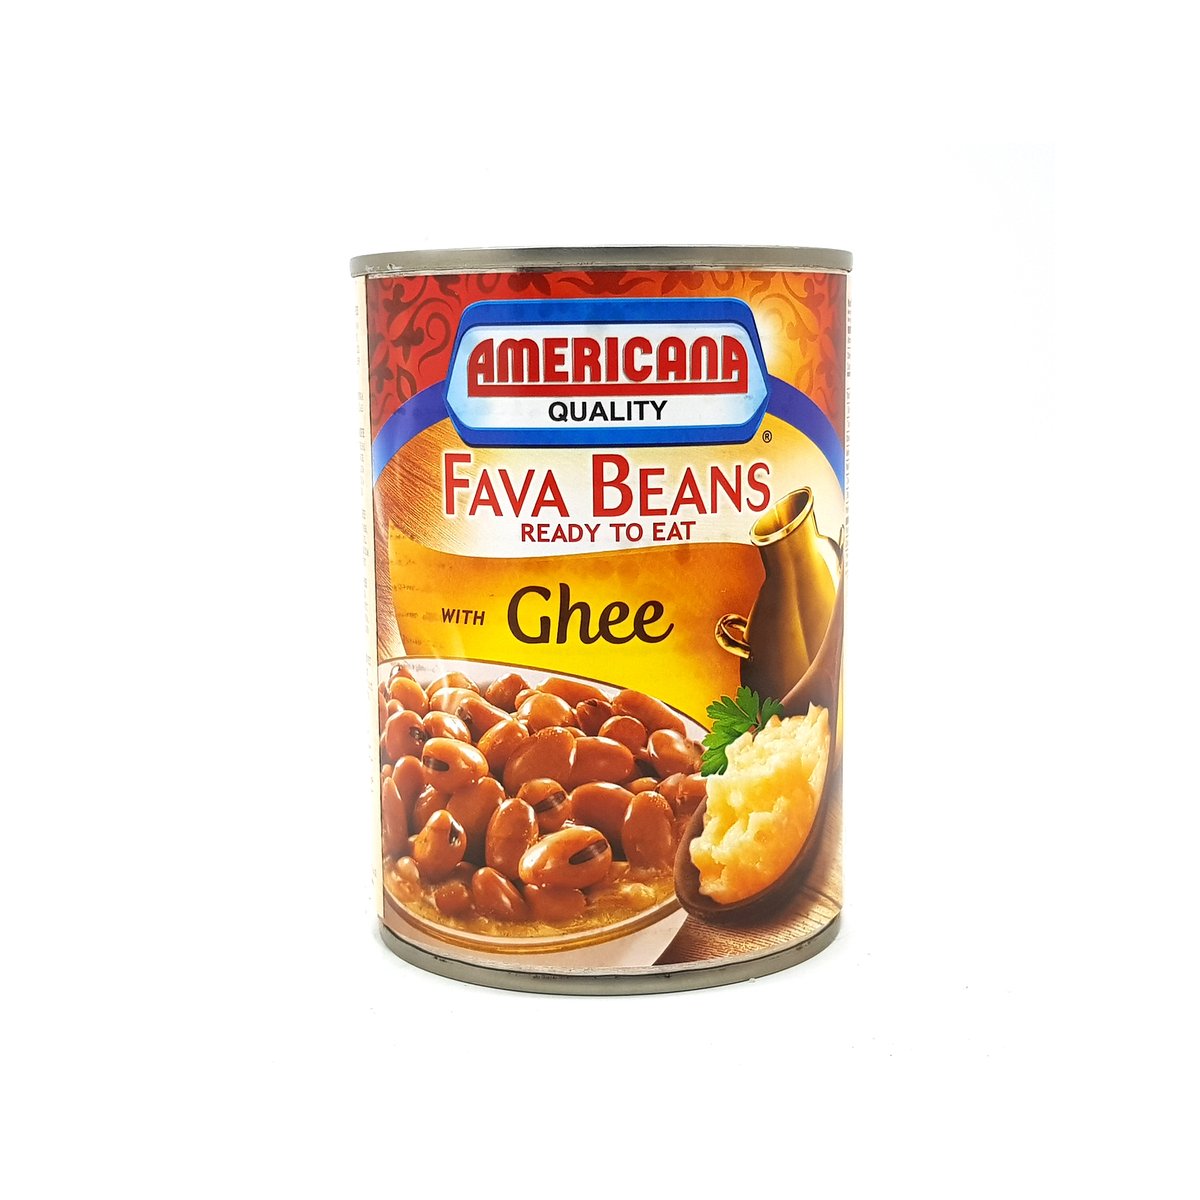 Americana Fava Beans With Ghee 400g